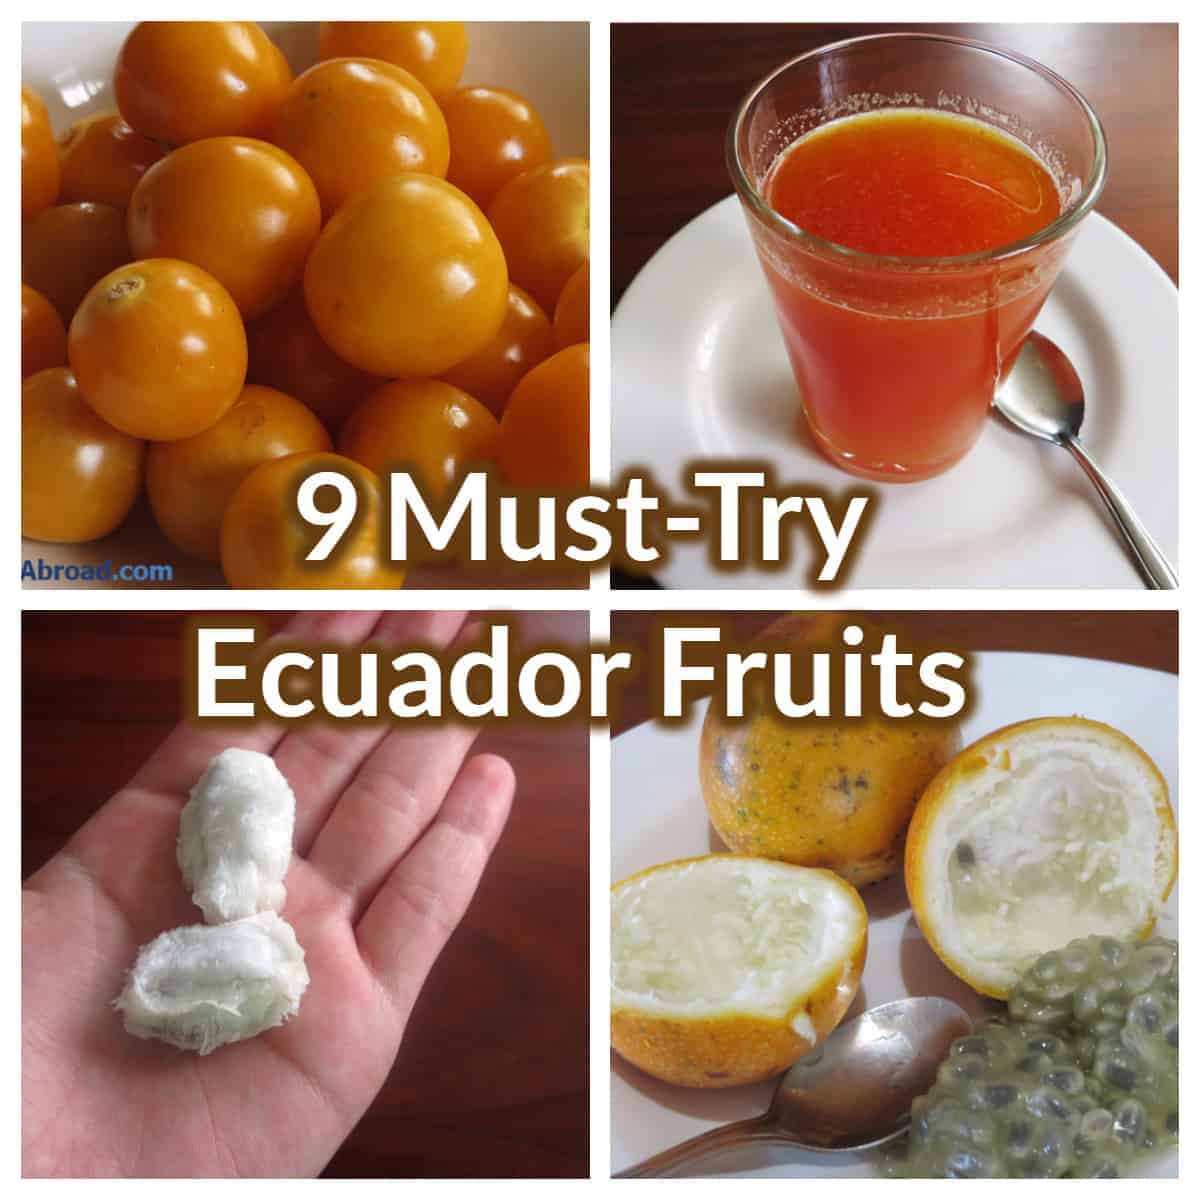 Ecuador fruits